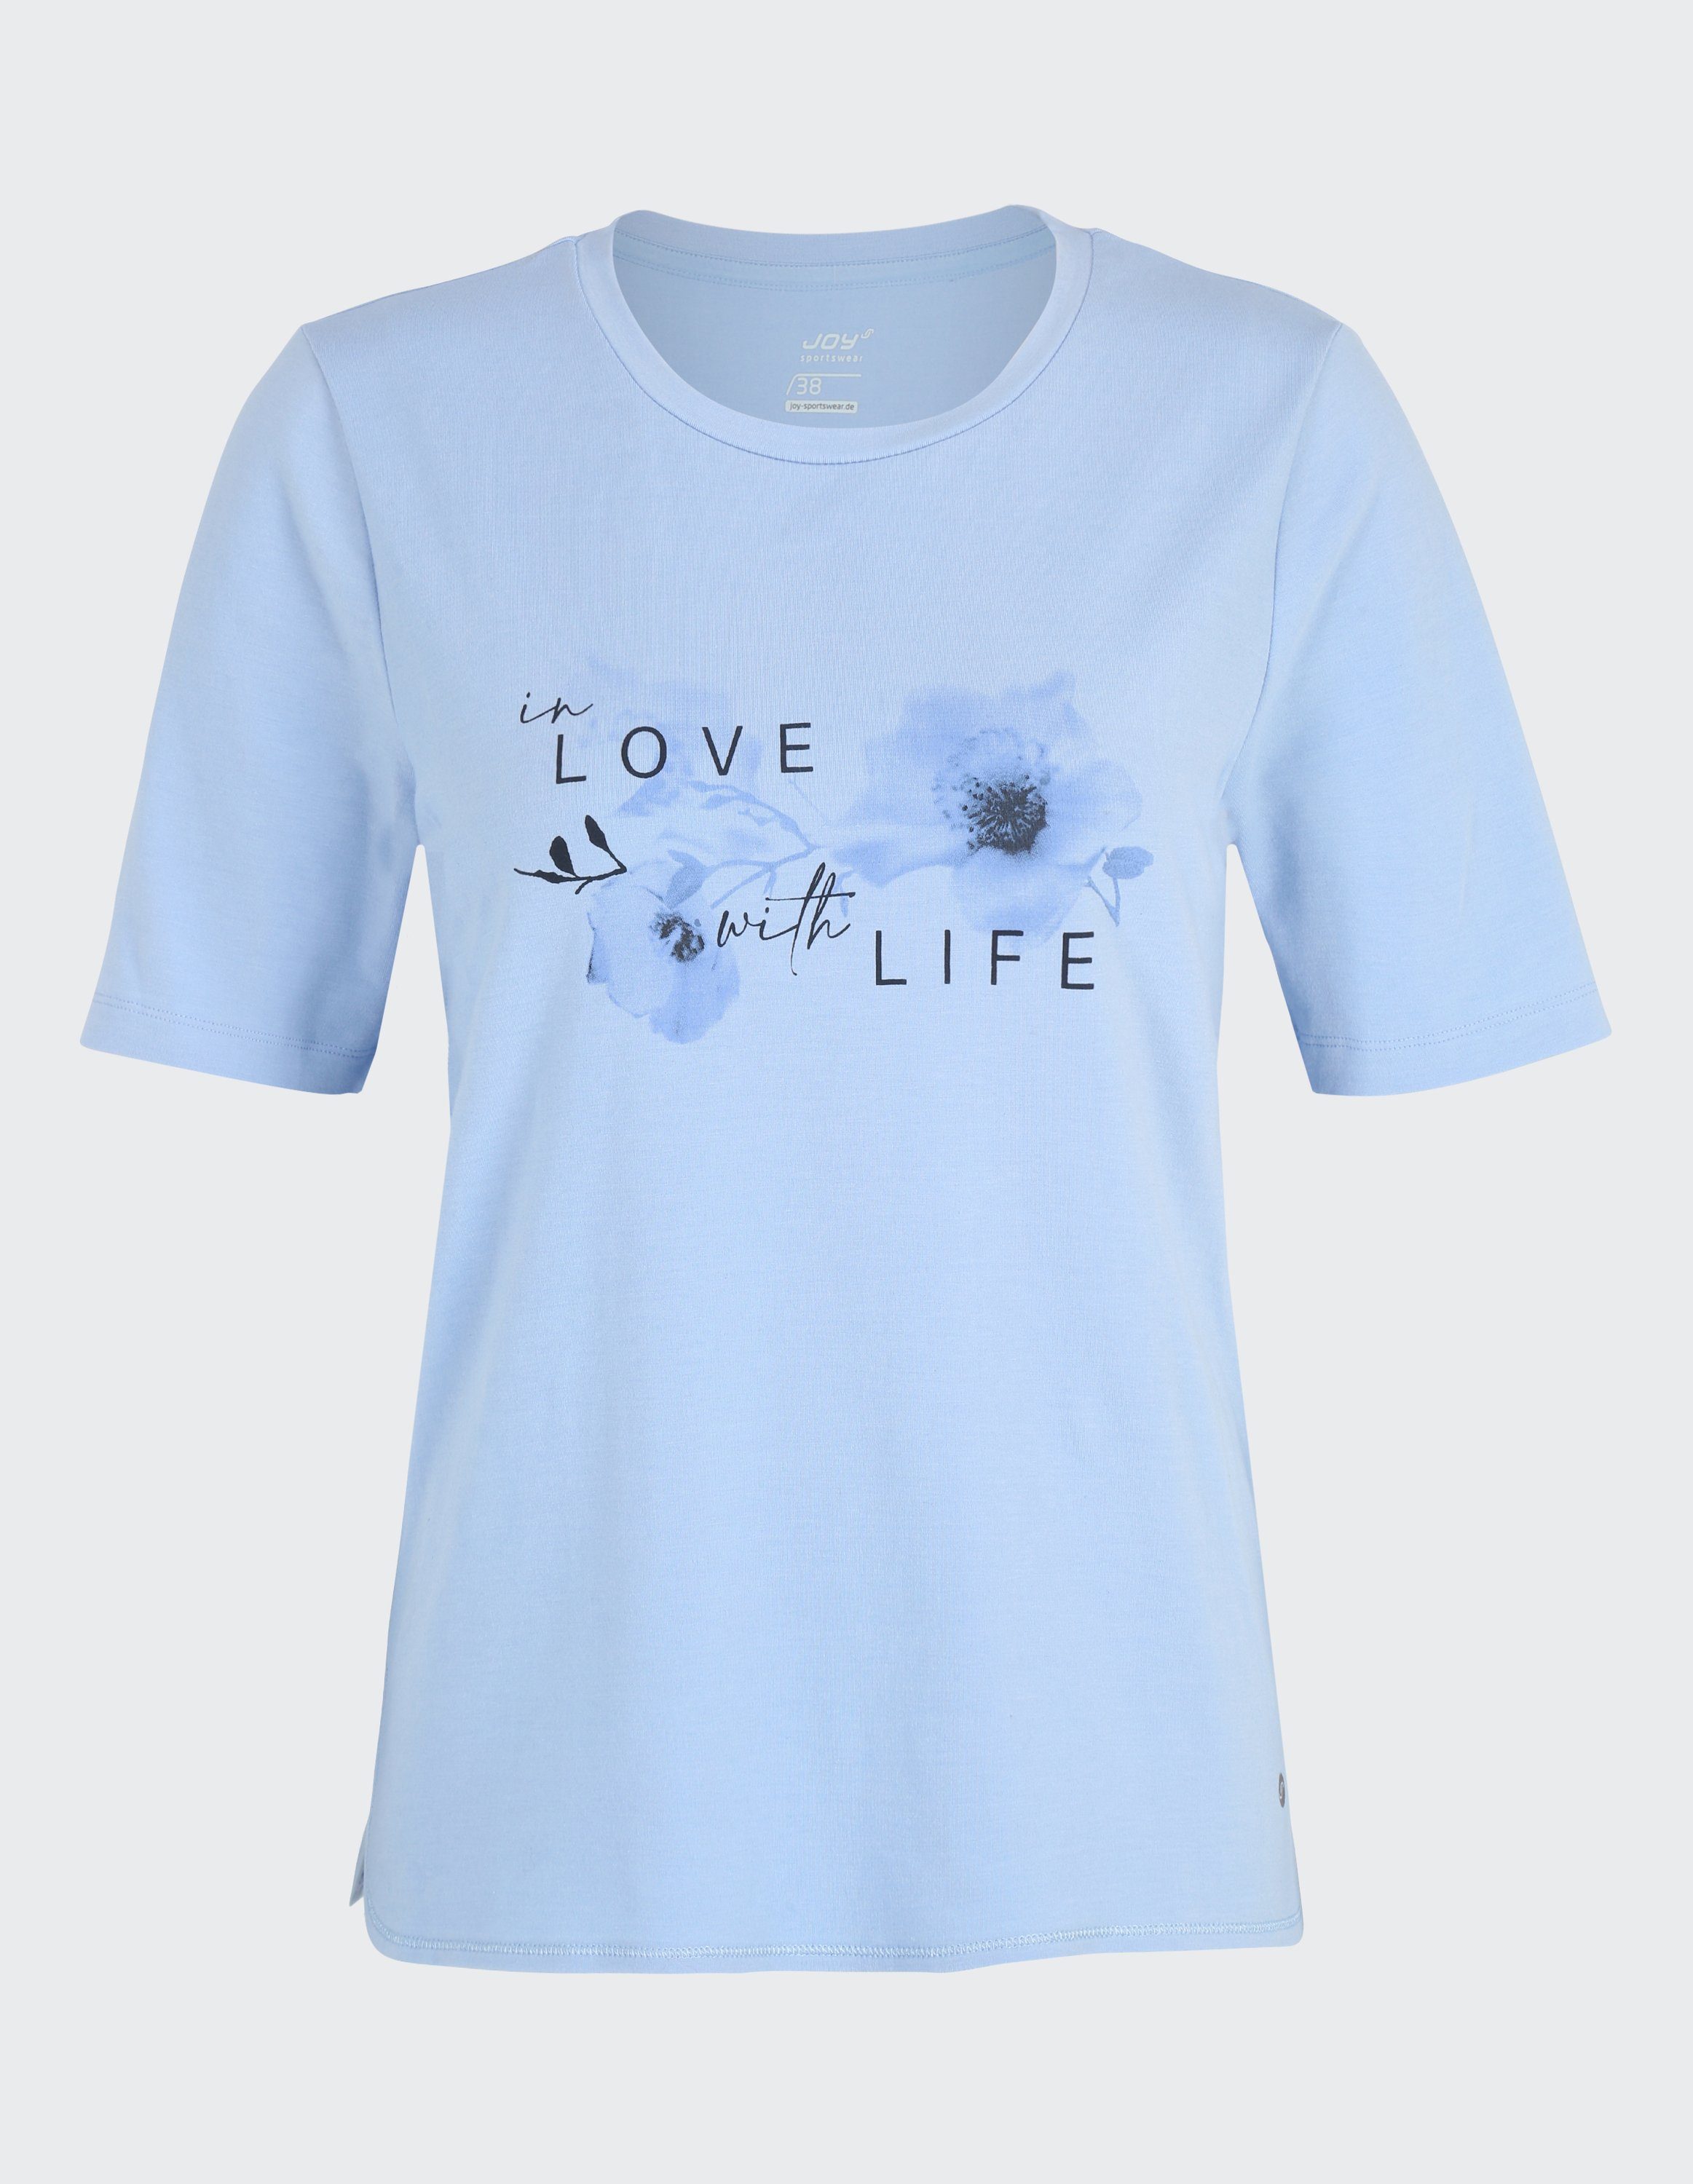 T-Shirt T-Shirt Sportswear blue Joy LUZIE serenity